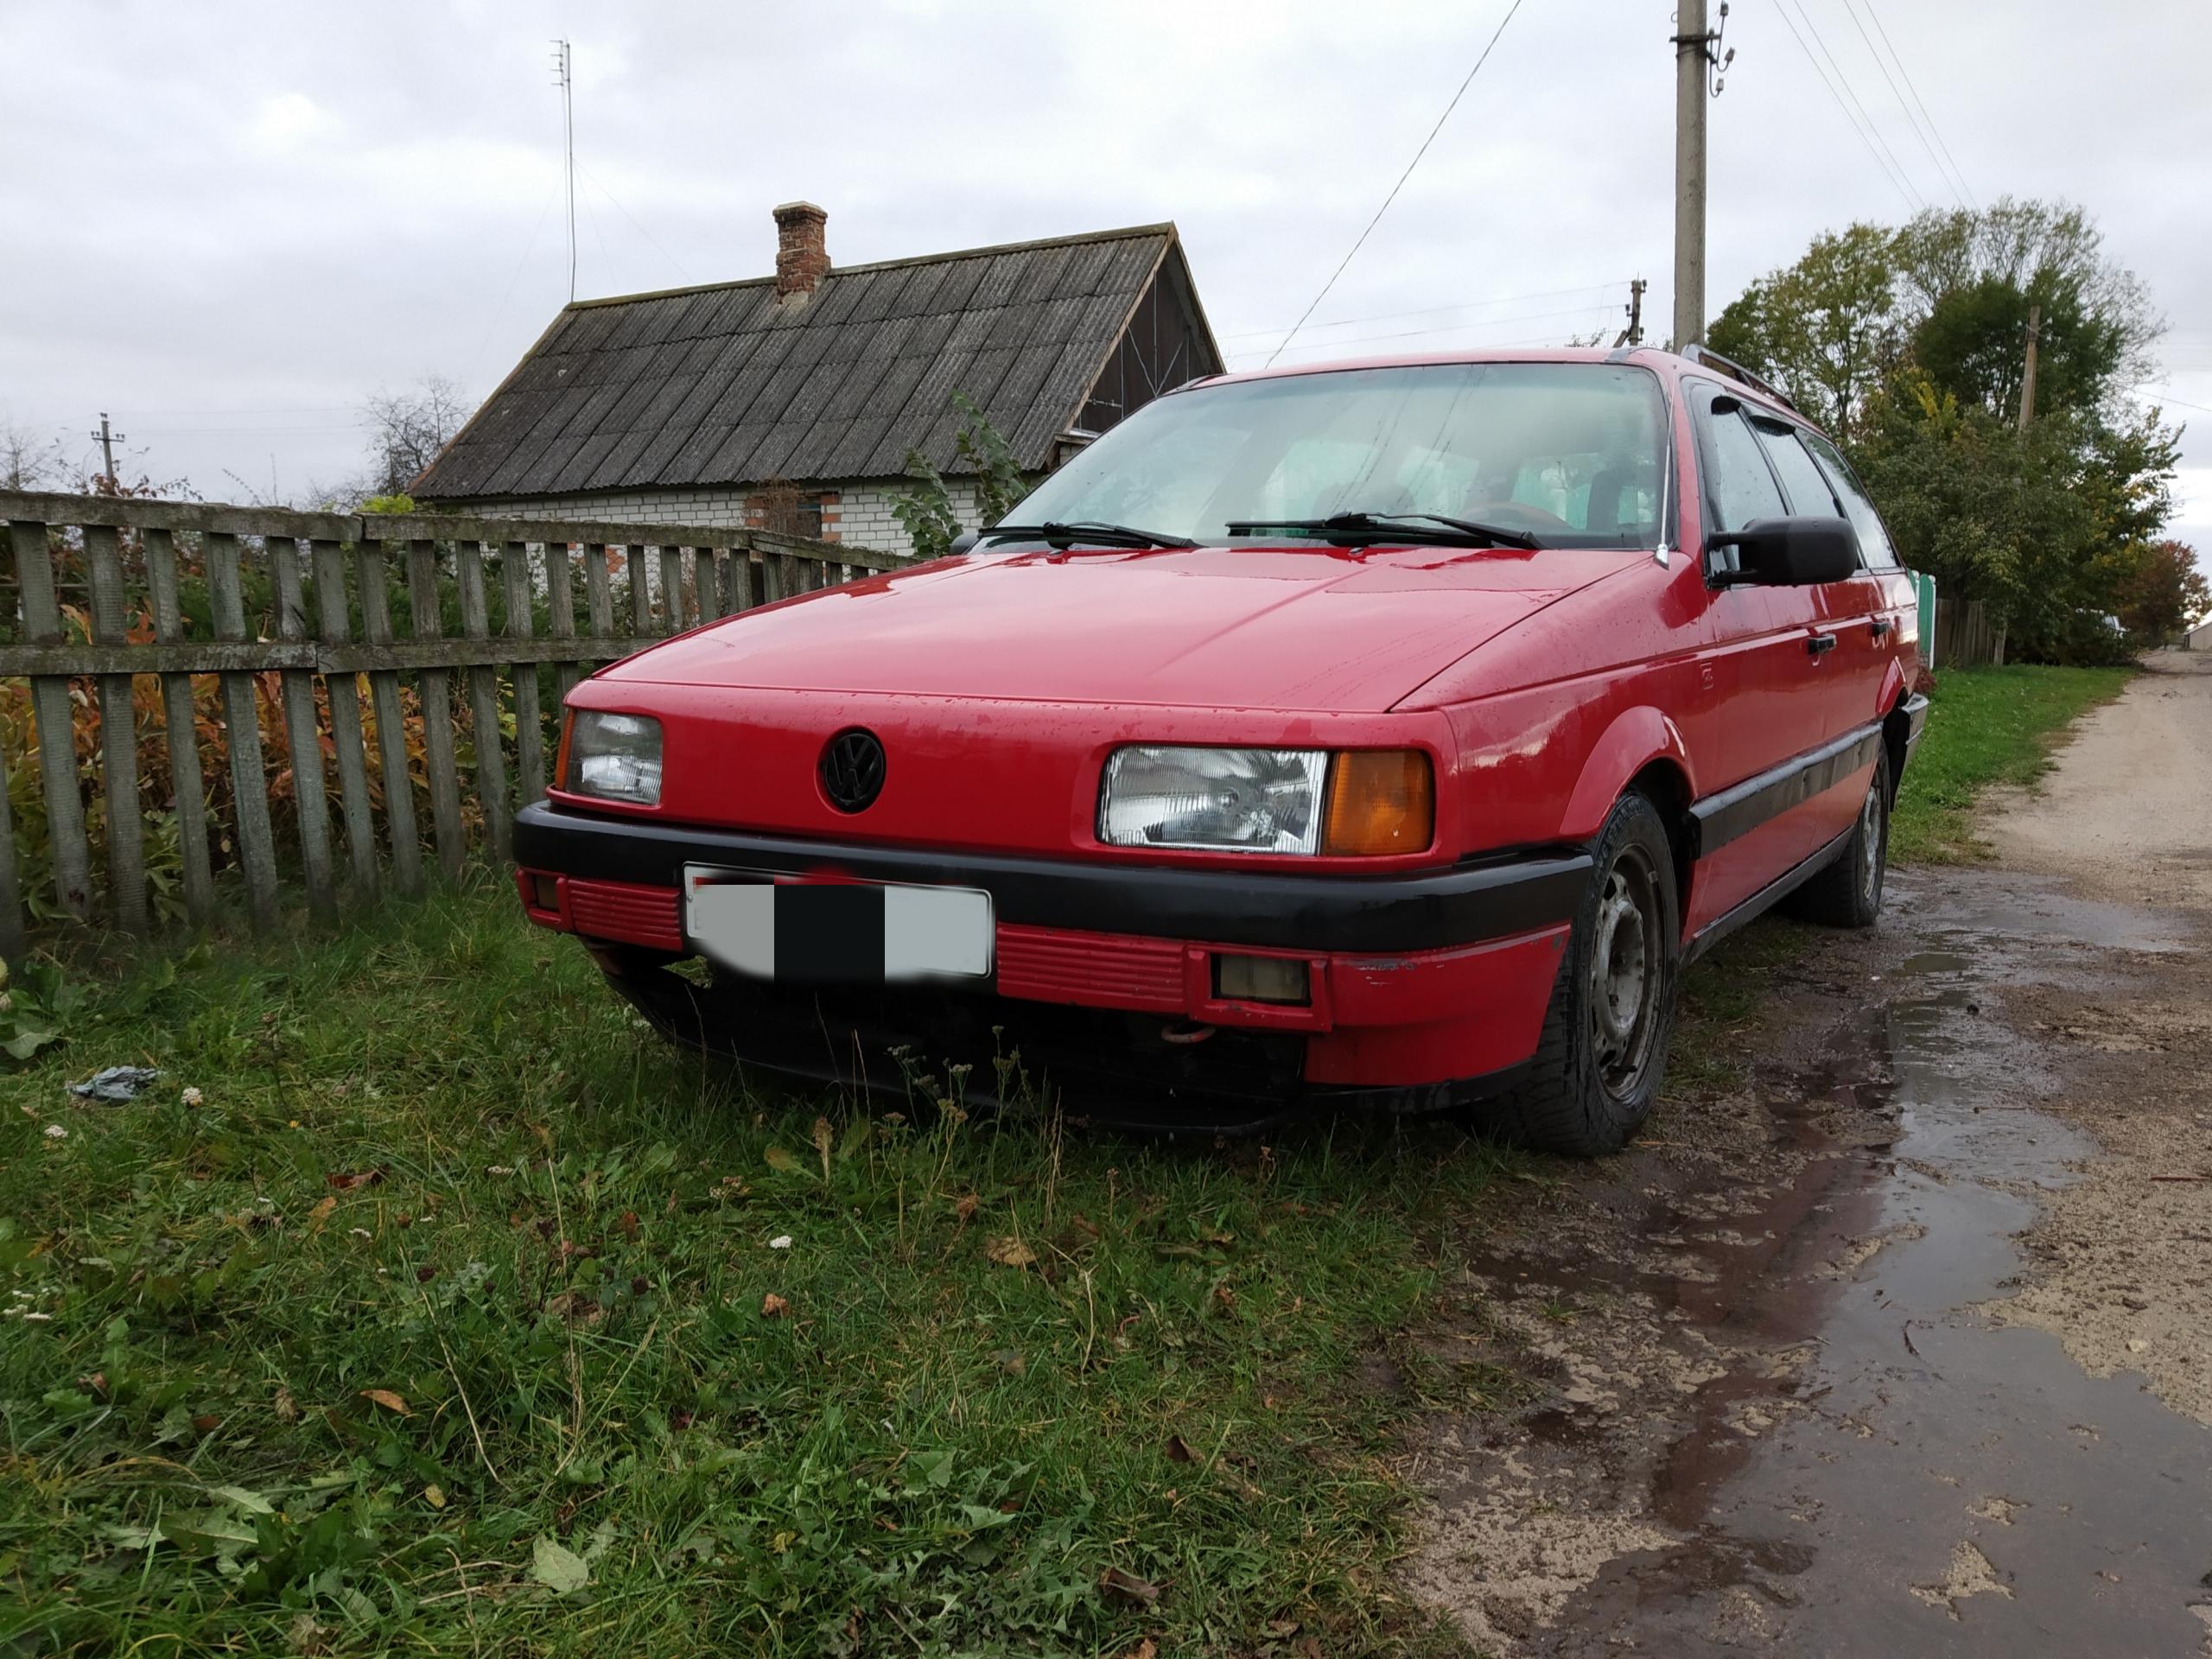 Продажа на куфаре в беларуси. VW Passat b3 1989г 1,6 седан, бампер передний. Машина куфар. Куфар Брестская область Барановичи. Куфар авто Беларусь.